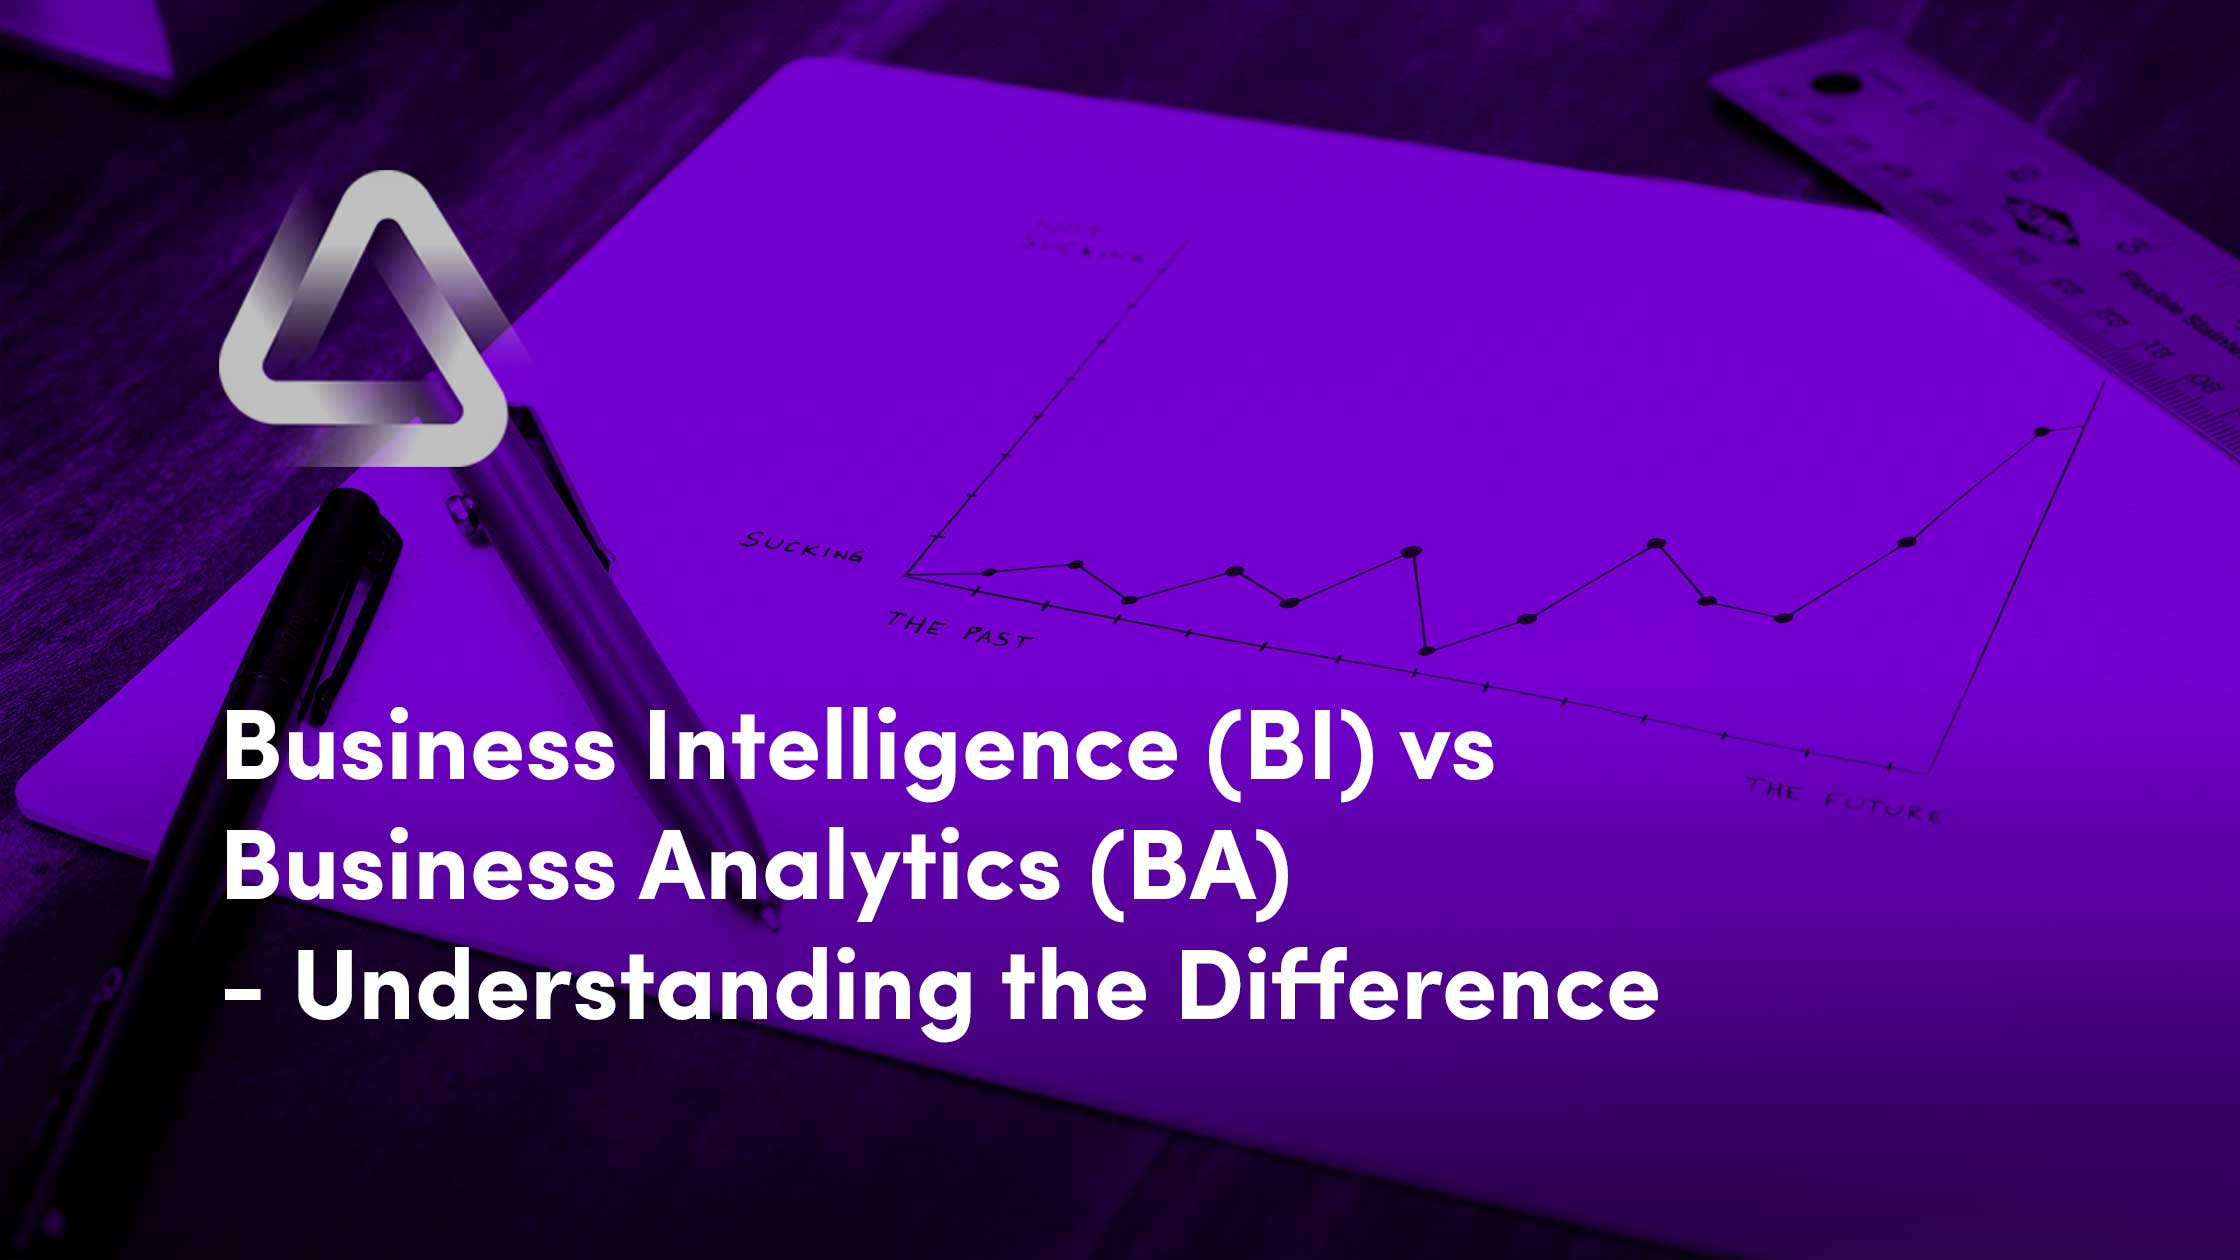 Business Intelligence (BI) vs Business Analytics (BA) - Understanding the Difference